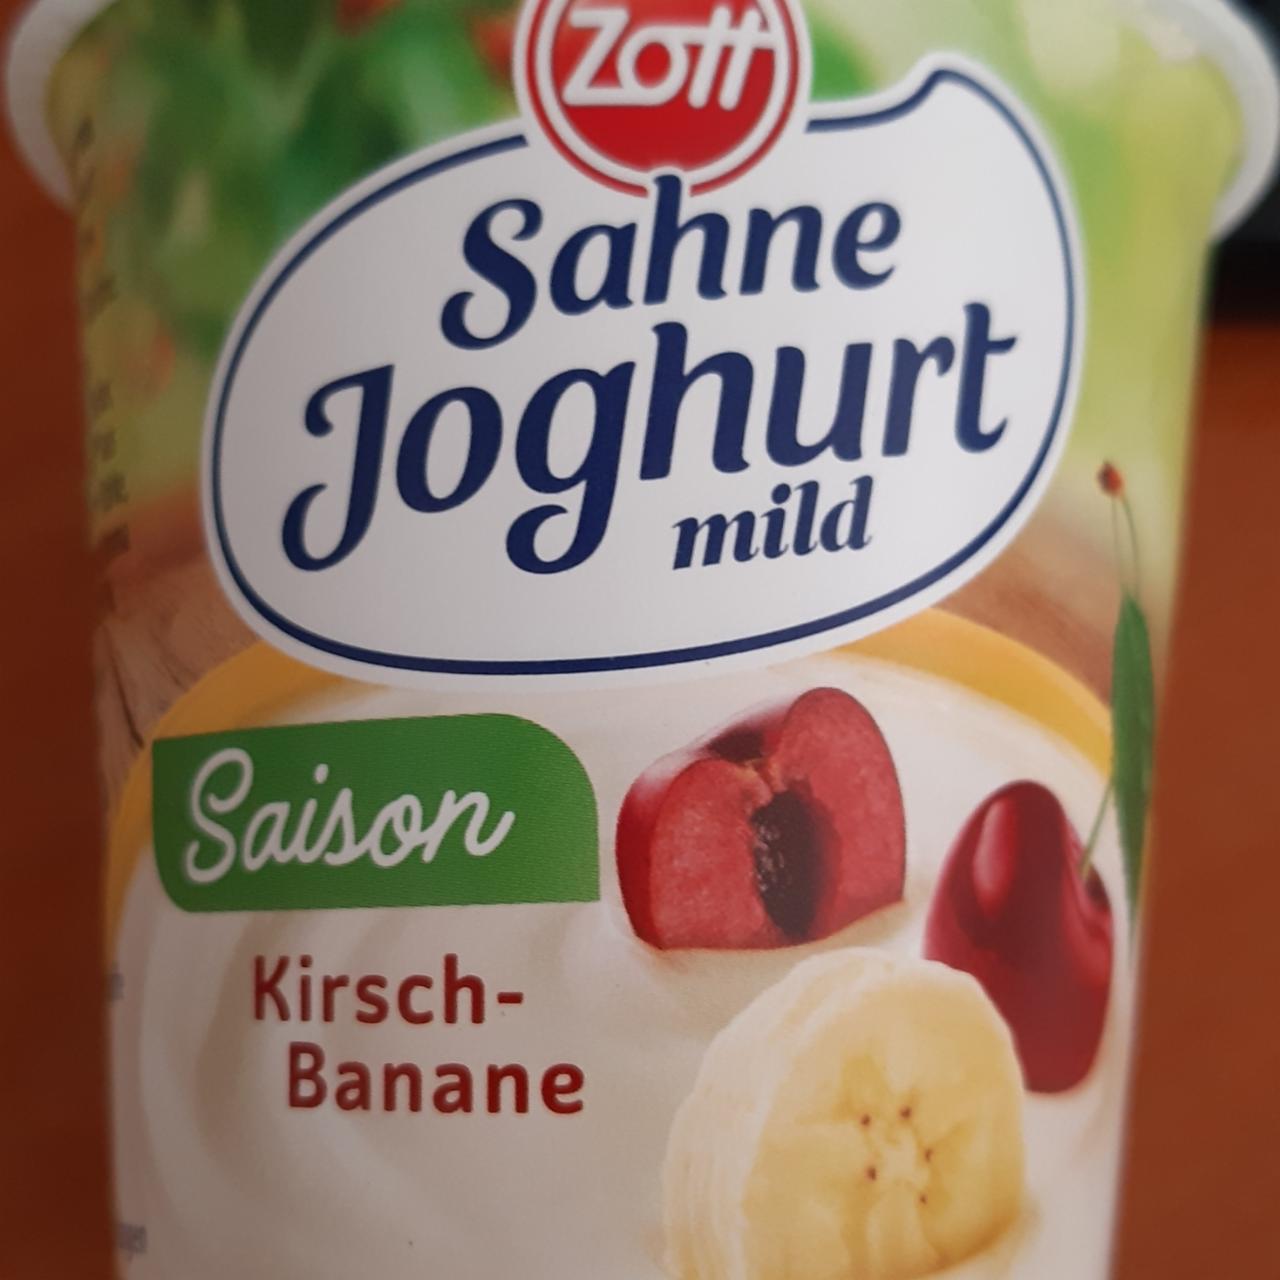 Fotografie - Sahne Jogurt mild Saison Kirsch-Banane